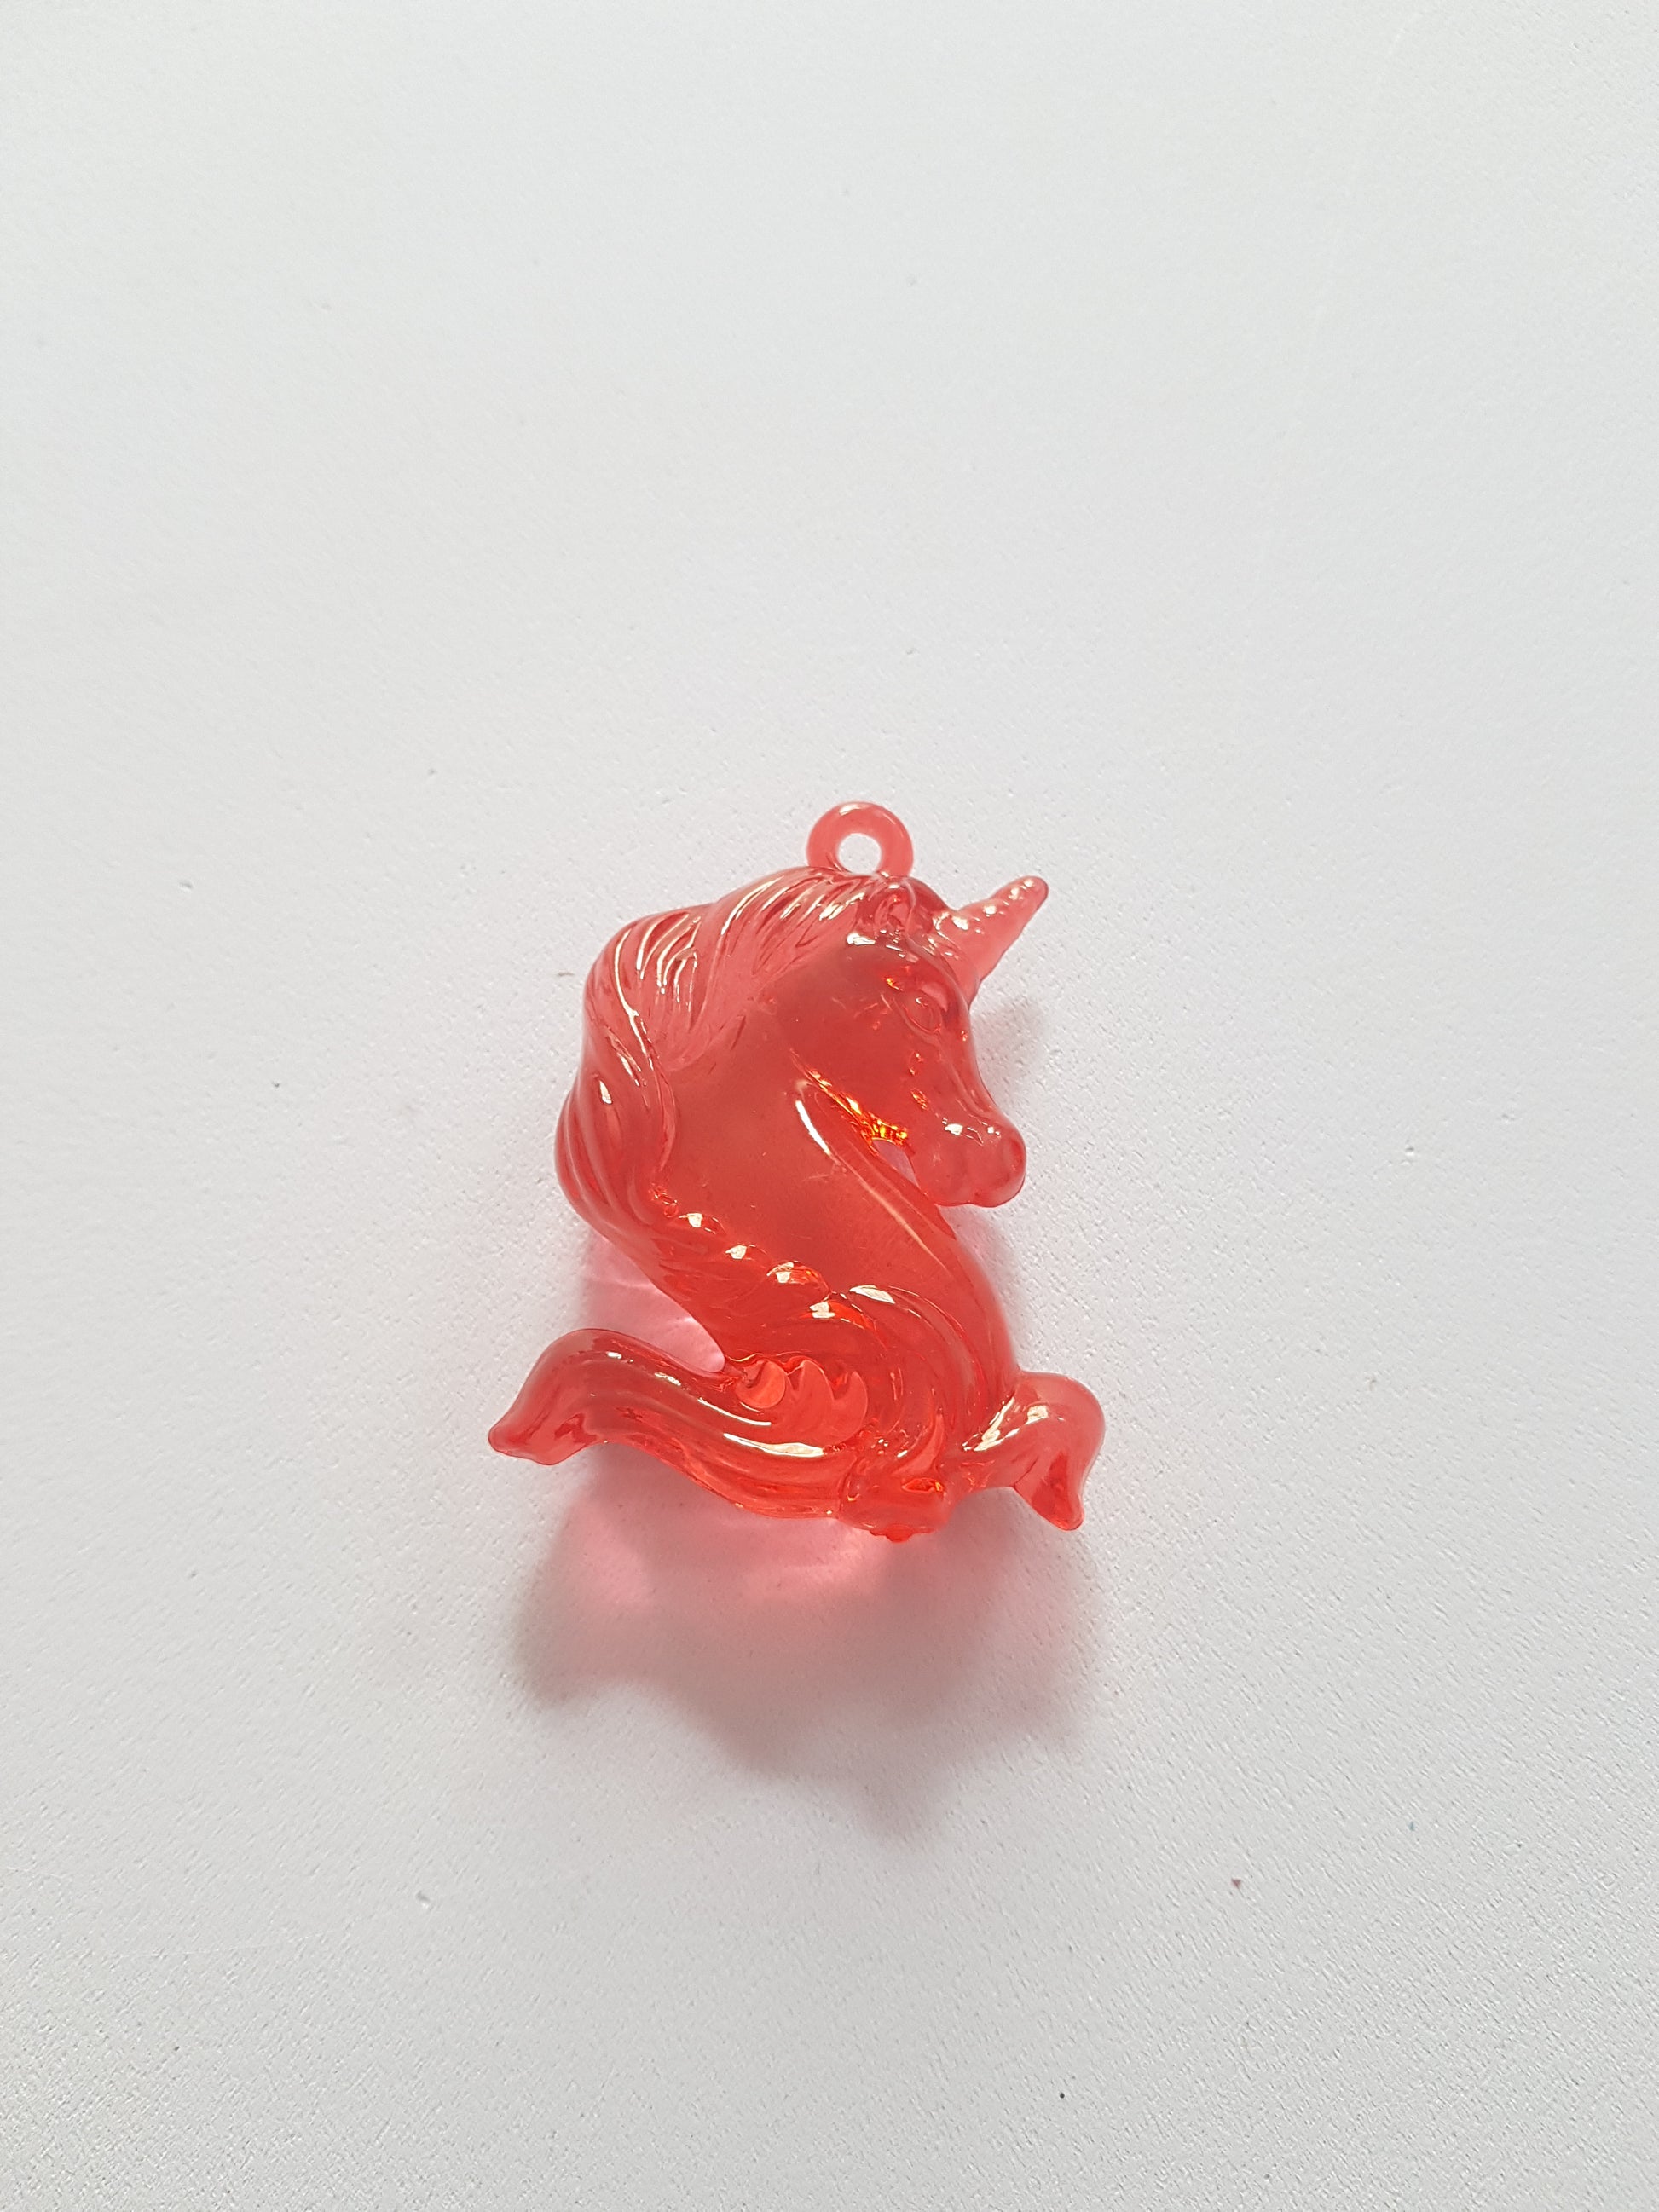 51mm acrylic unicorn pendant - red